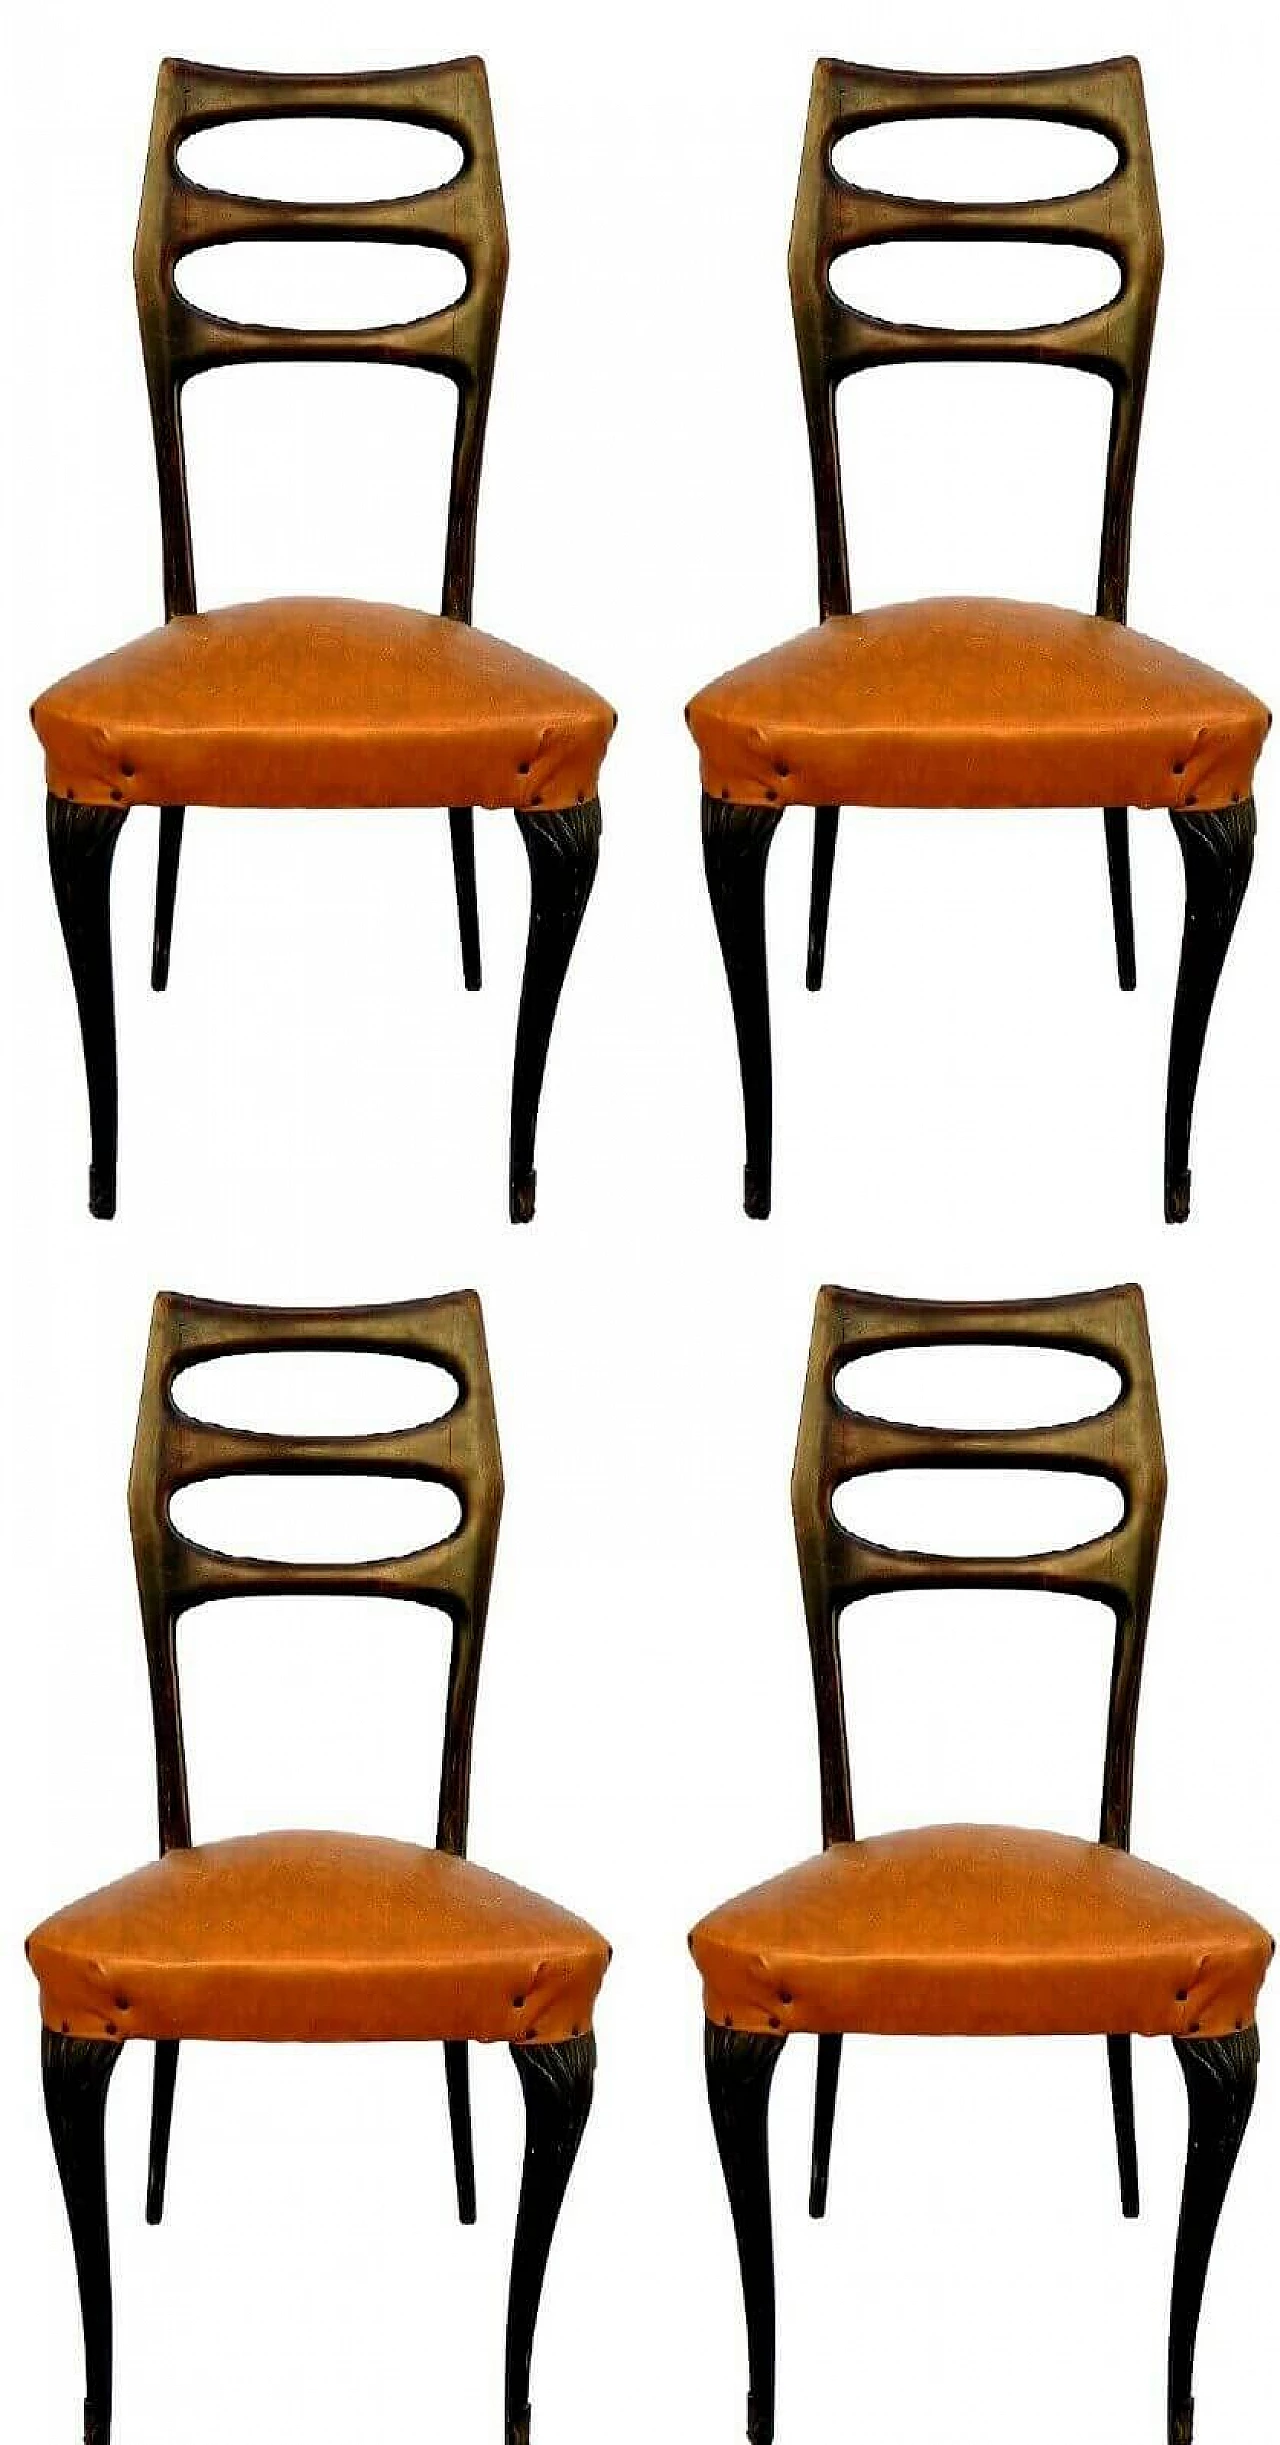 4 walnut chairs by Paolo Buffa, 50s 1170546